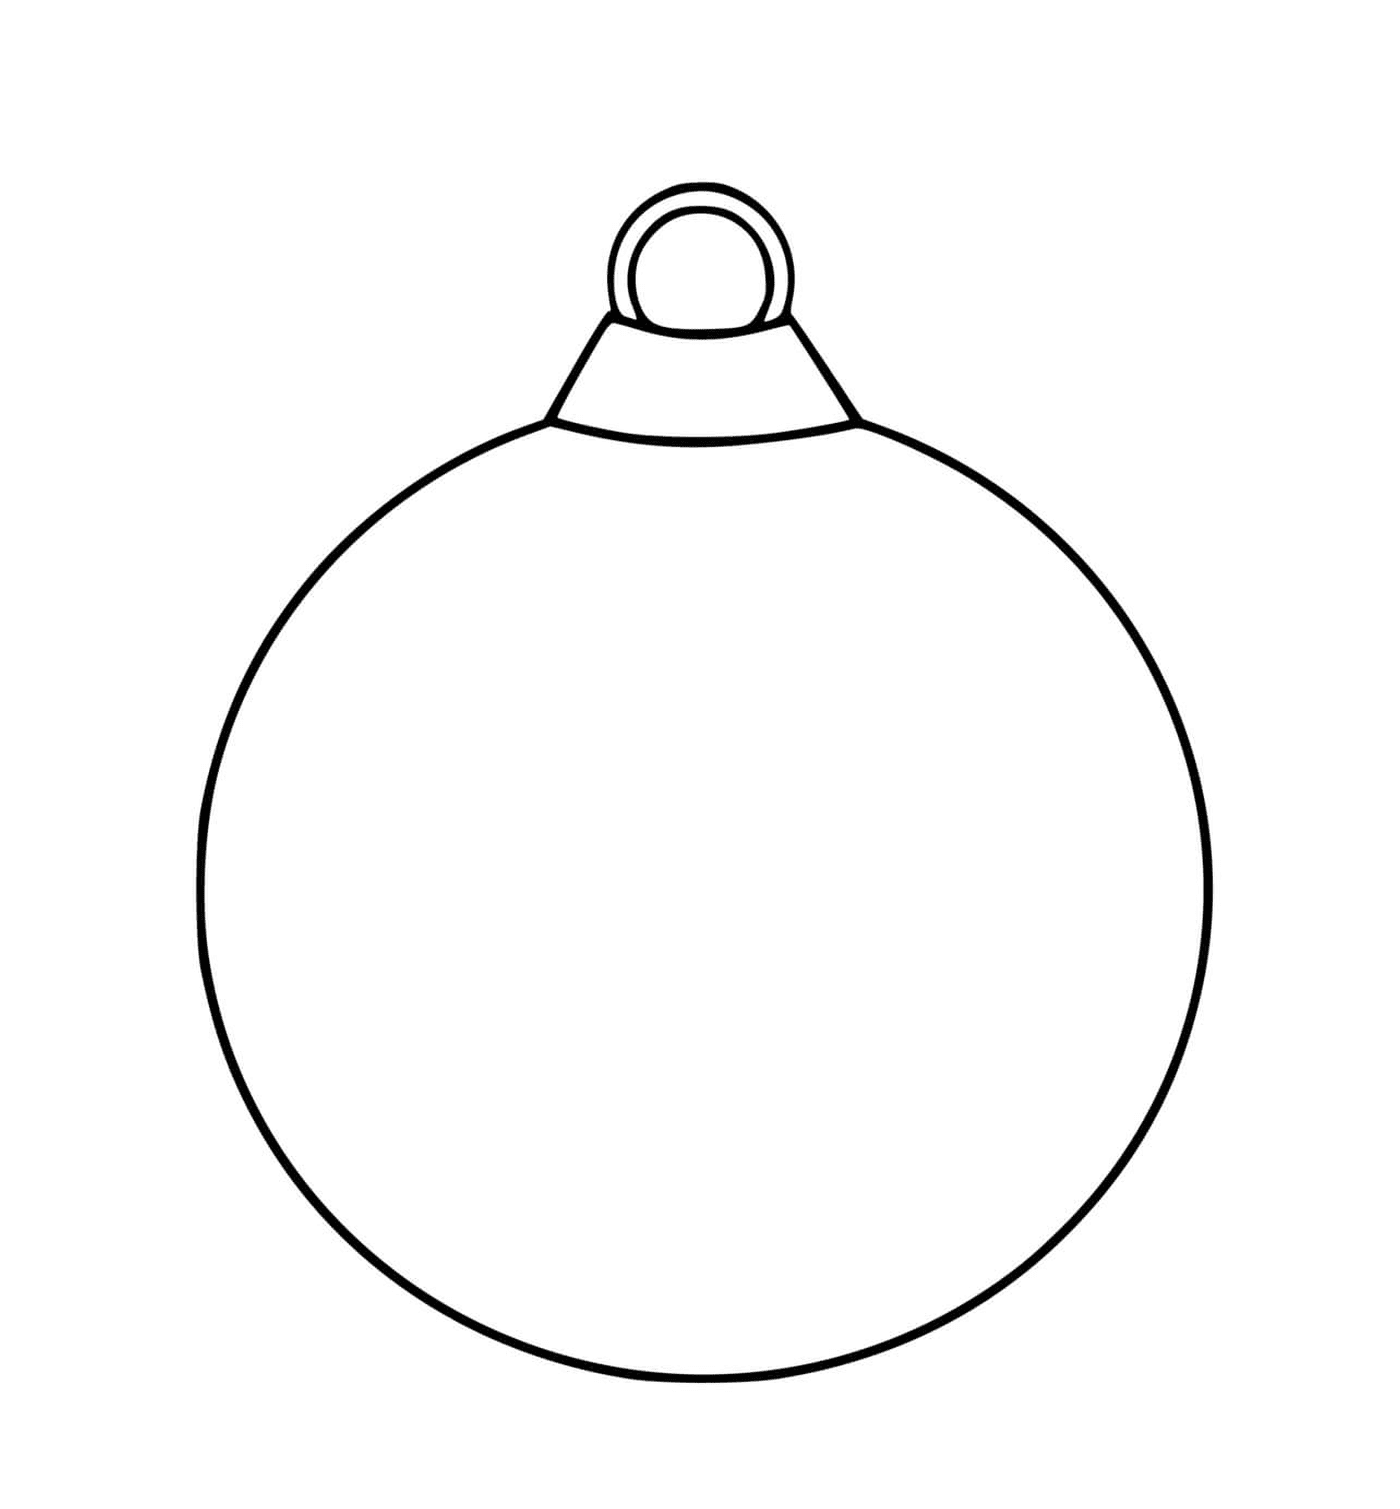  एक सादा काला आउटलाइन के साथ एक खाली क्रिसमस गेंद 